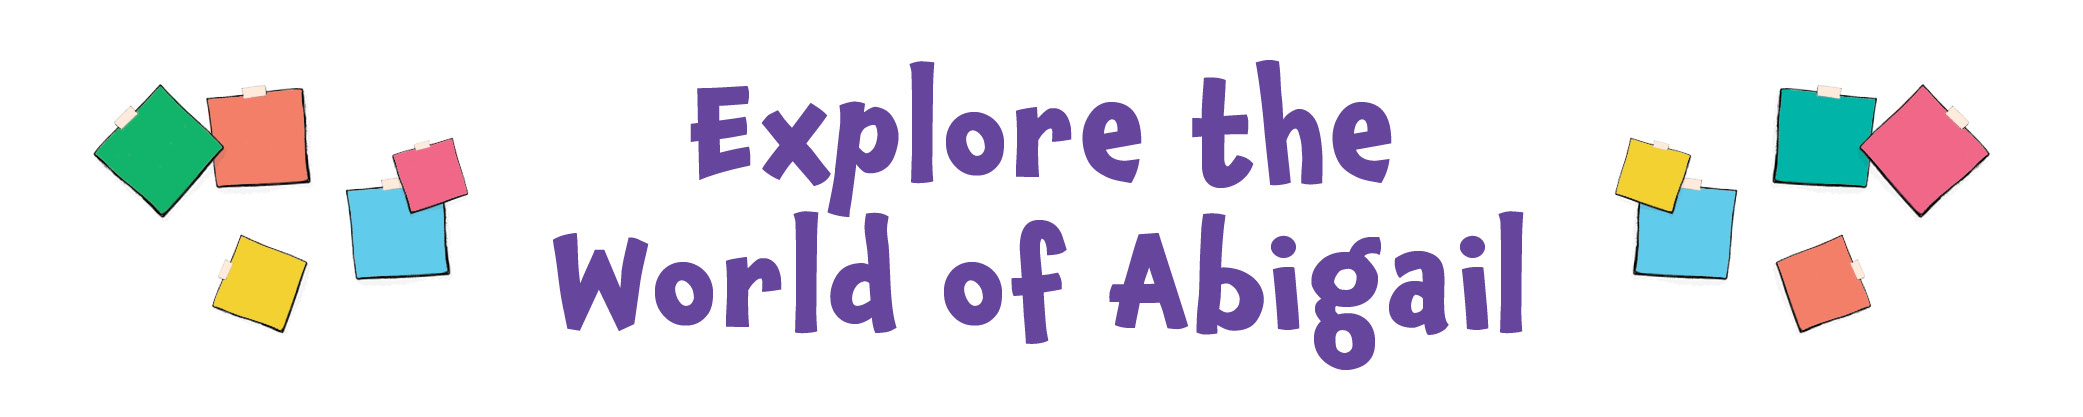 "Explore the World of Abigail